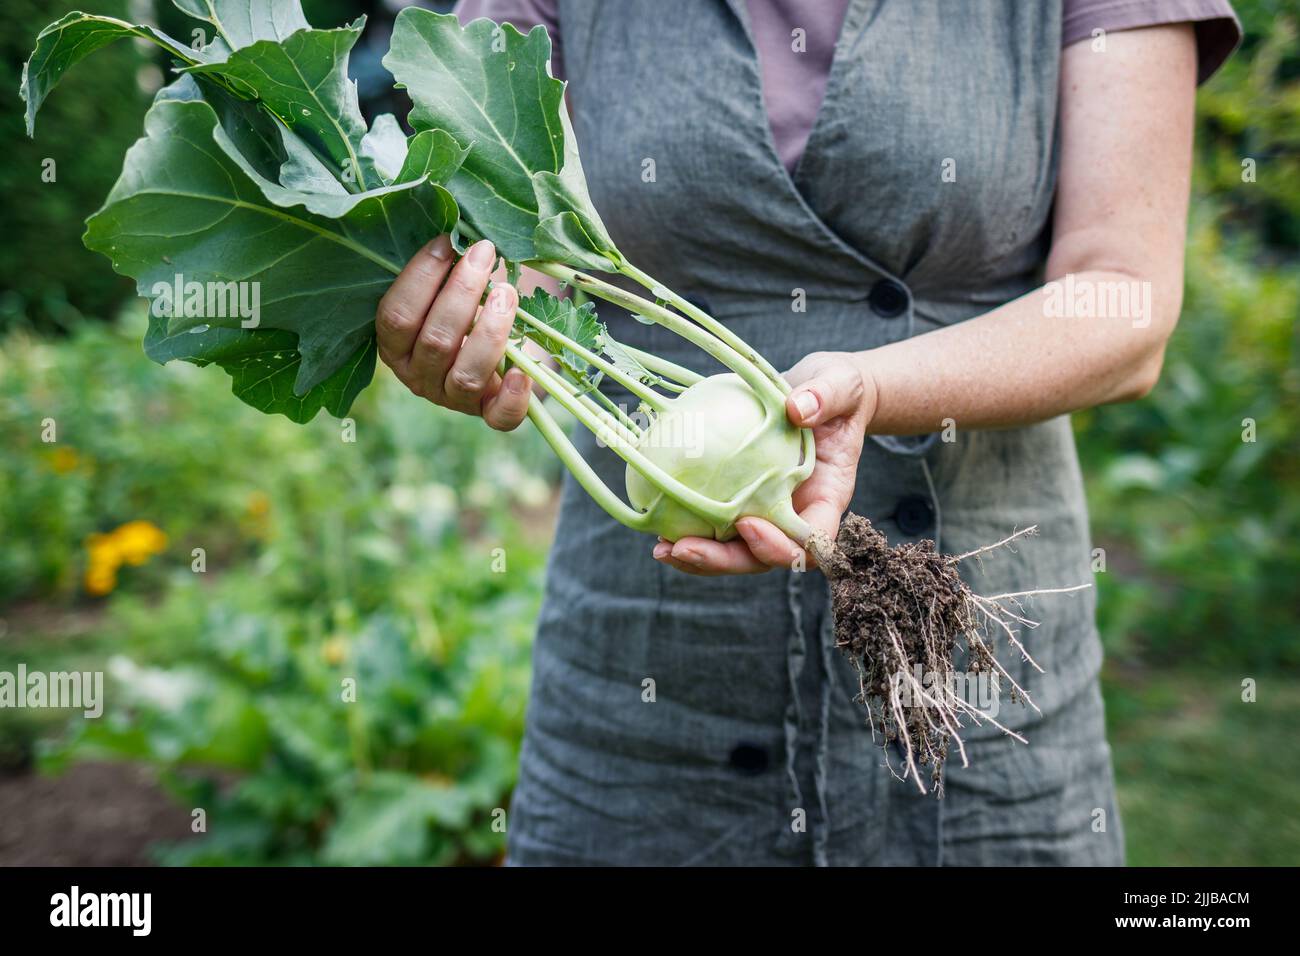 Kohlrabi in female hands. Woman harvesting ripe organic kohlrabi in vegetable garden Stock Photo